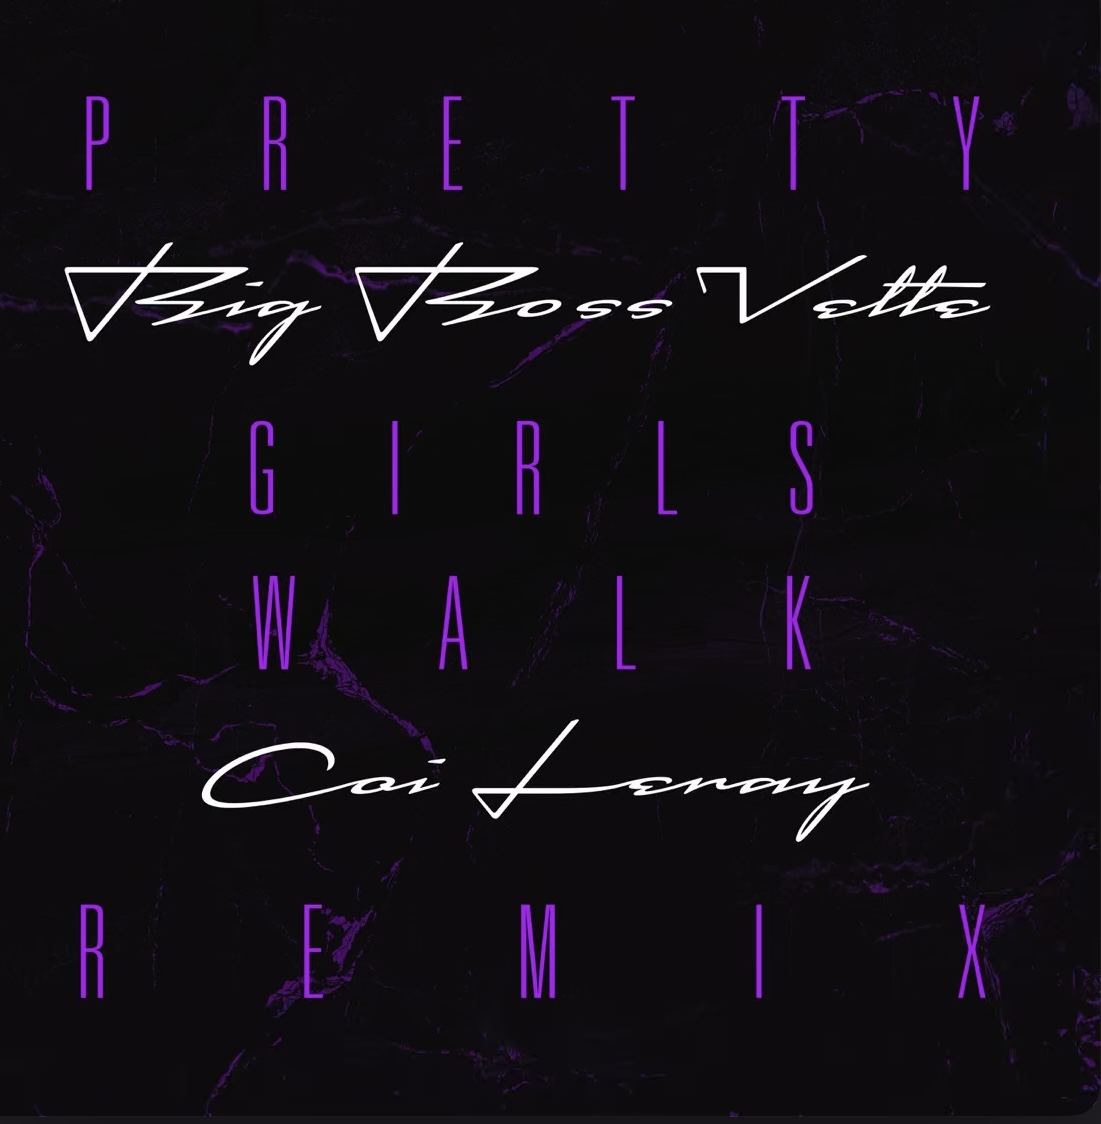 Big Boss Vette featuring Coi Leray — Pretty Girls Walk (Remix) cover artwork